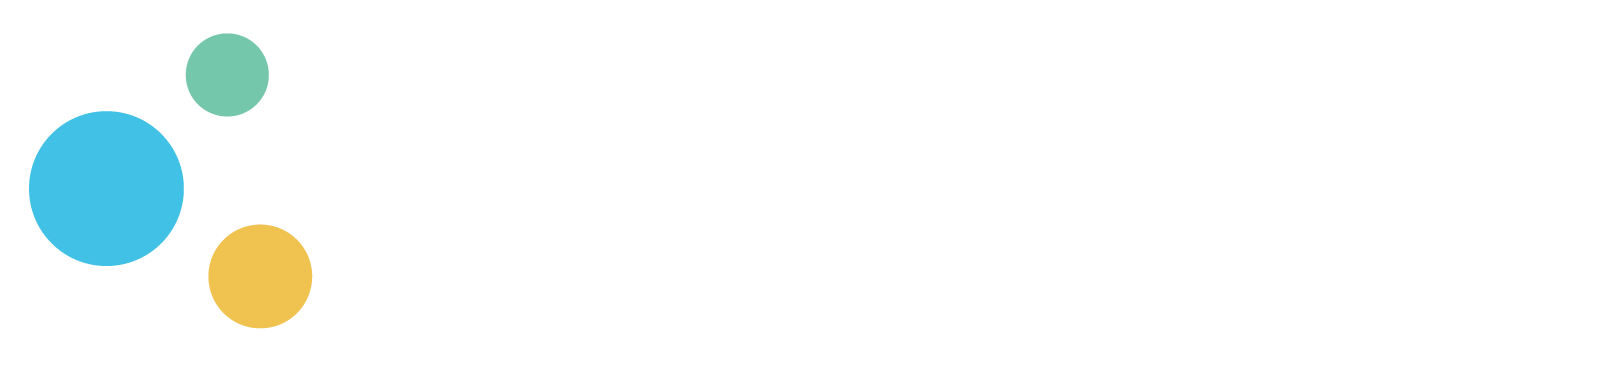 Echovate_White_Logo